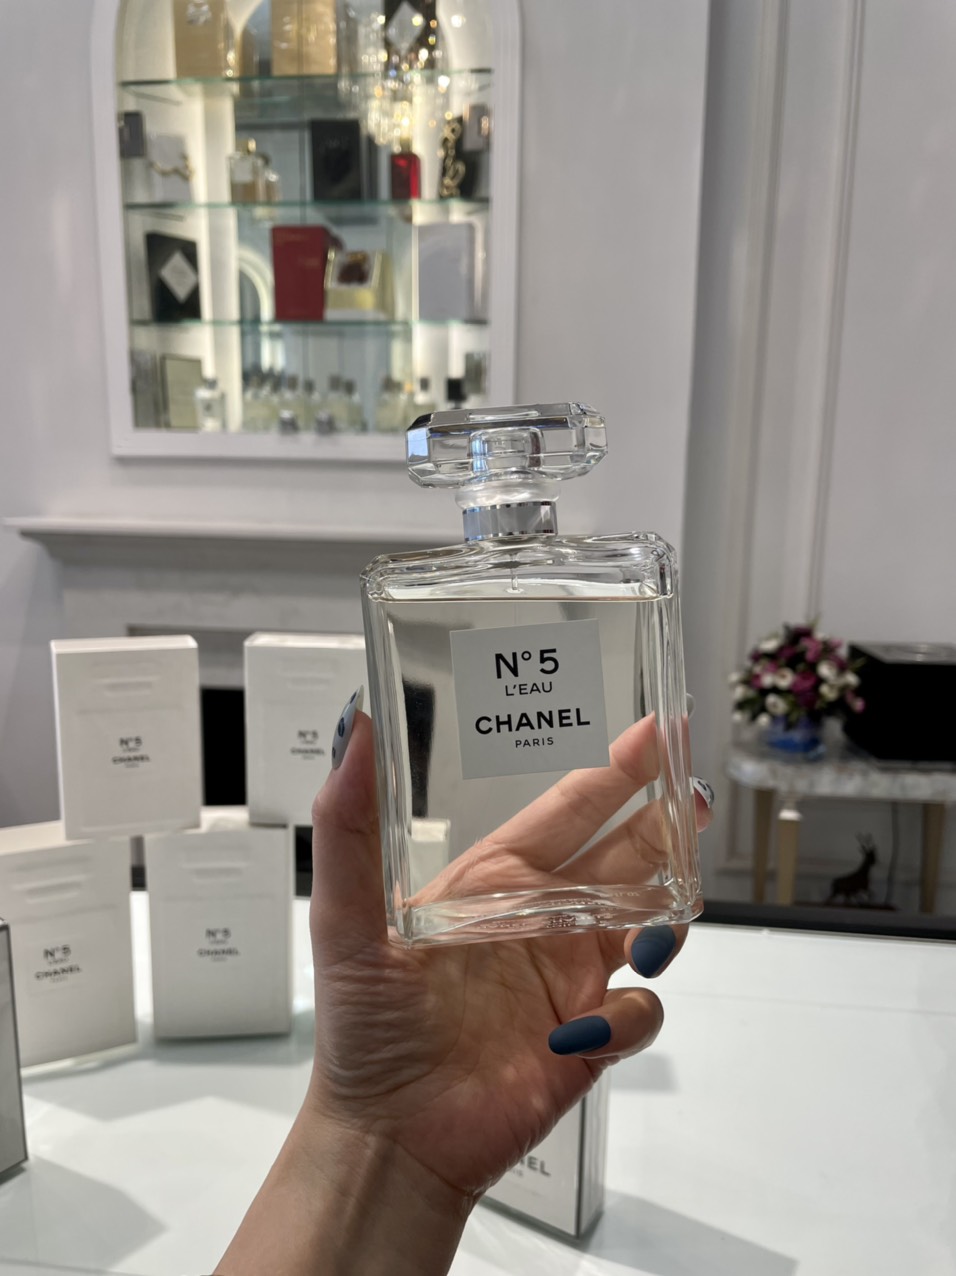 Chanel No 5 Leau Perfume by Chanel  FragranceXcom